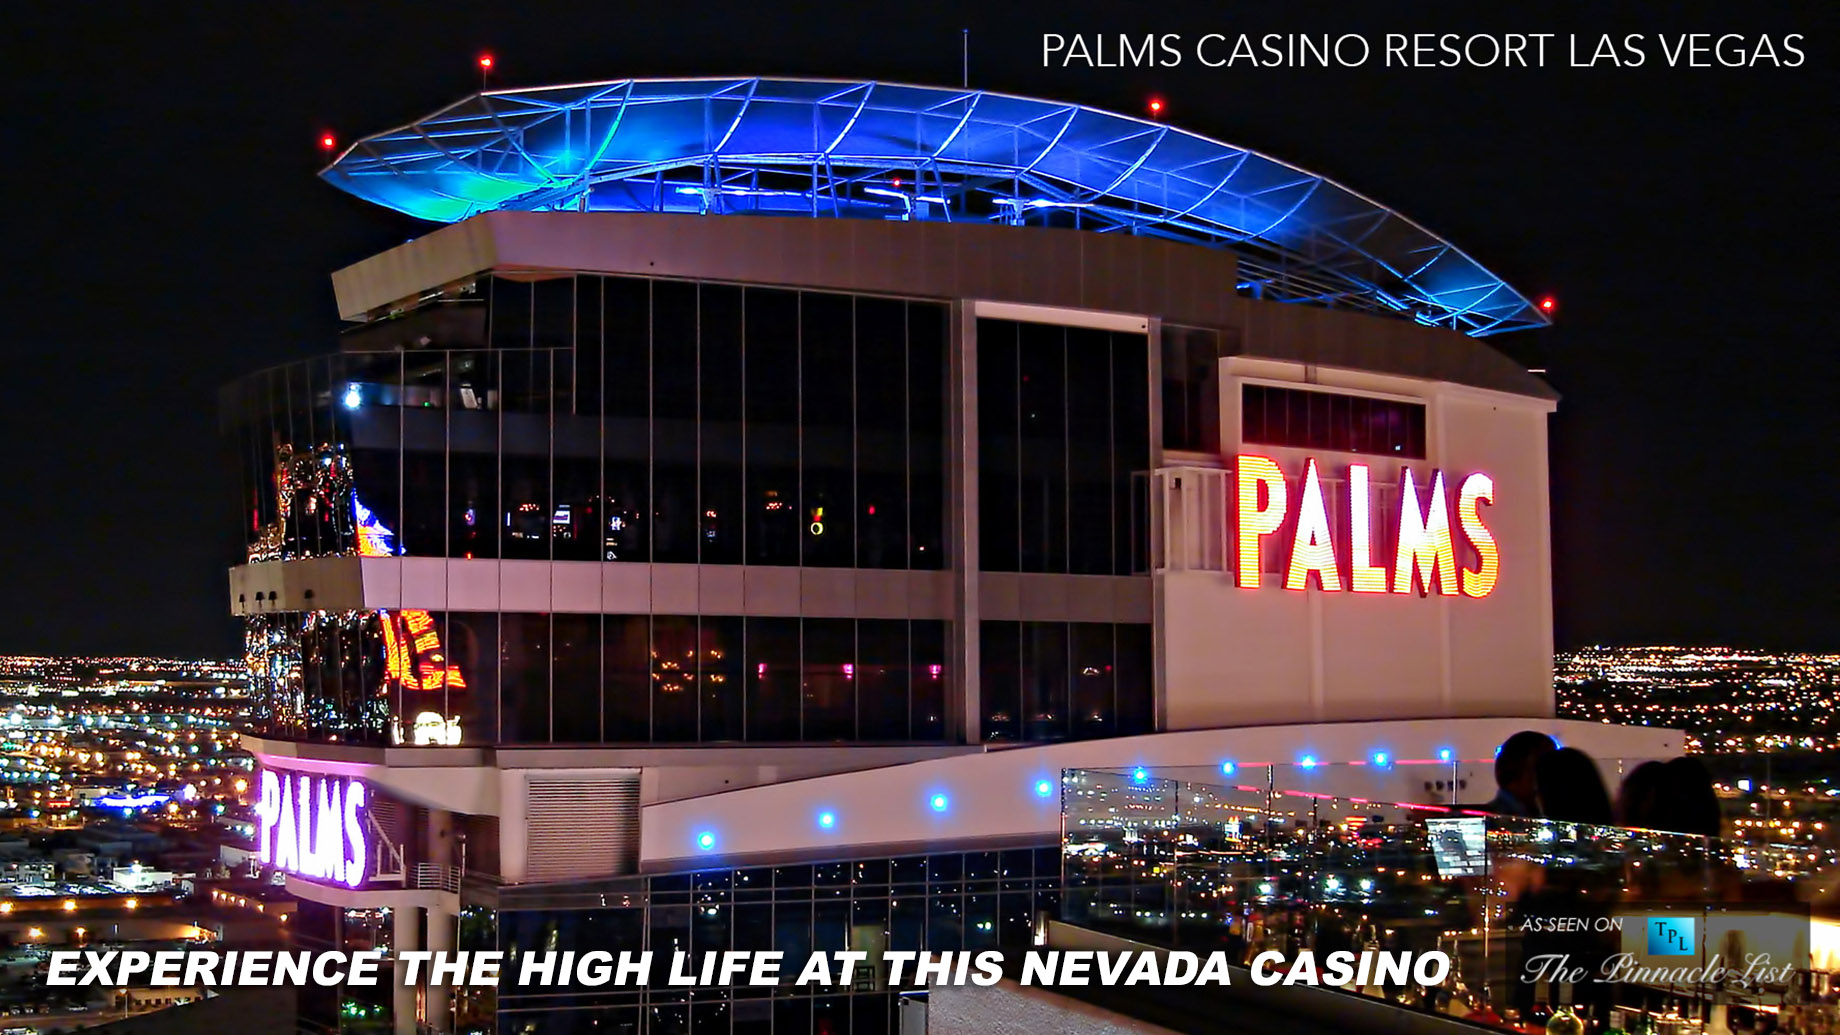 Palms Casino Resort Las Vegas - Experience the High Life at this Nevada Casino